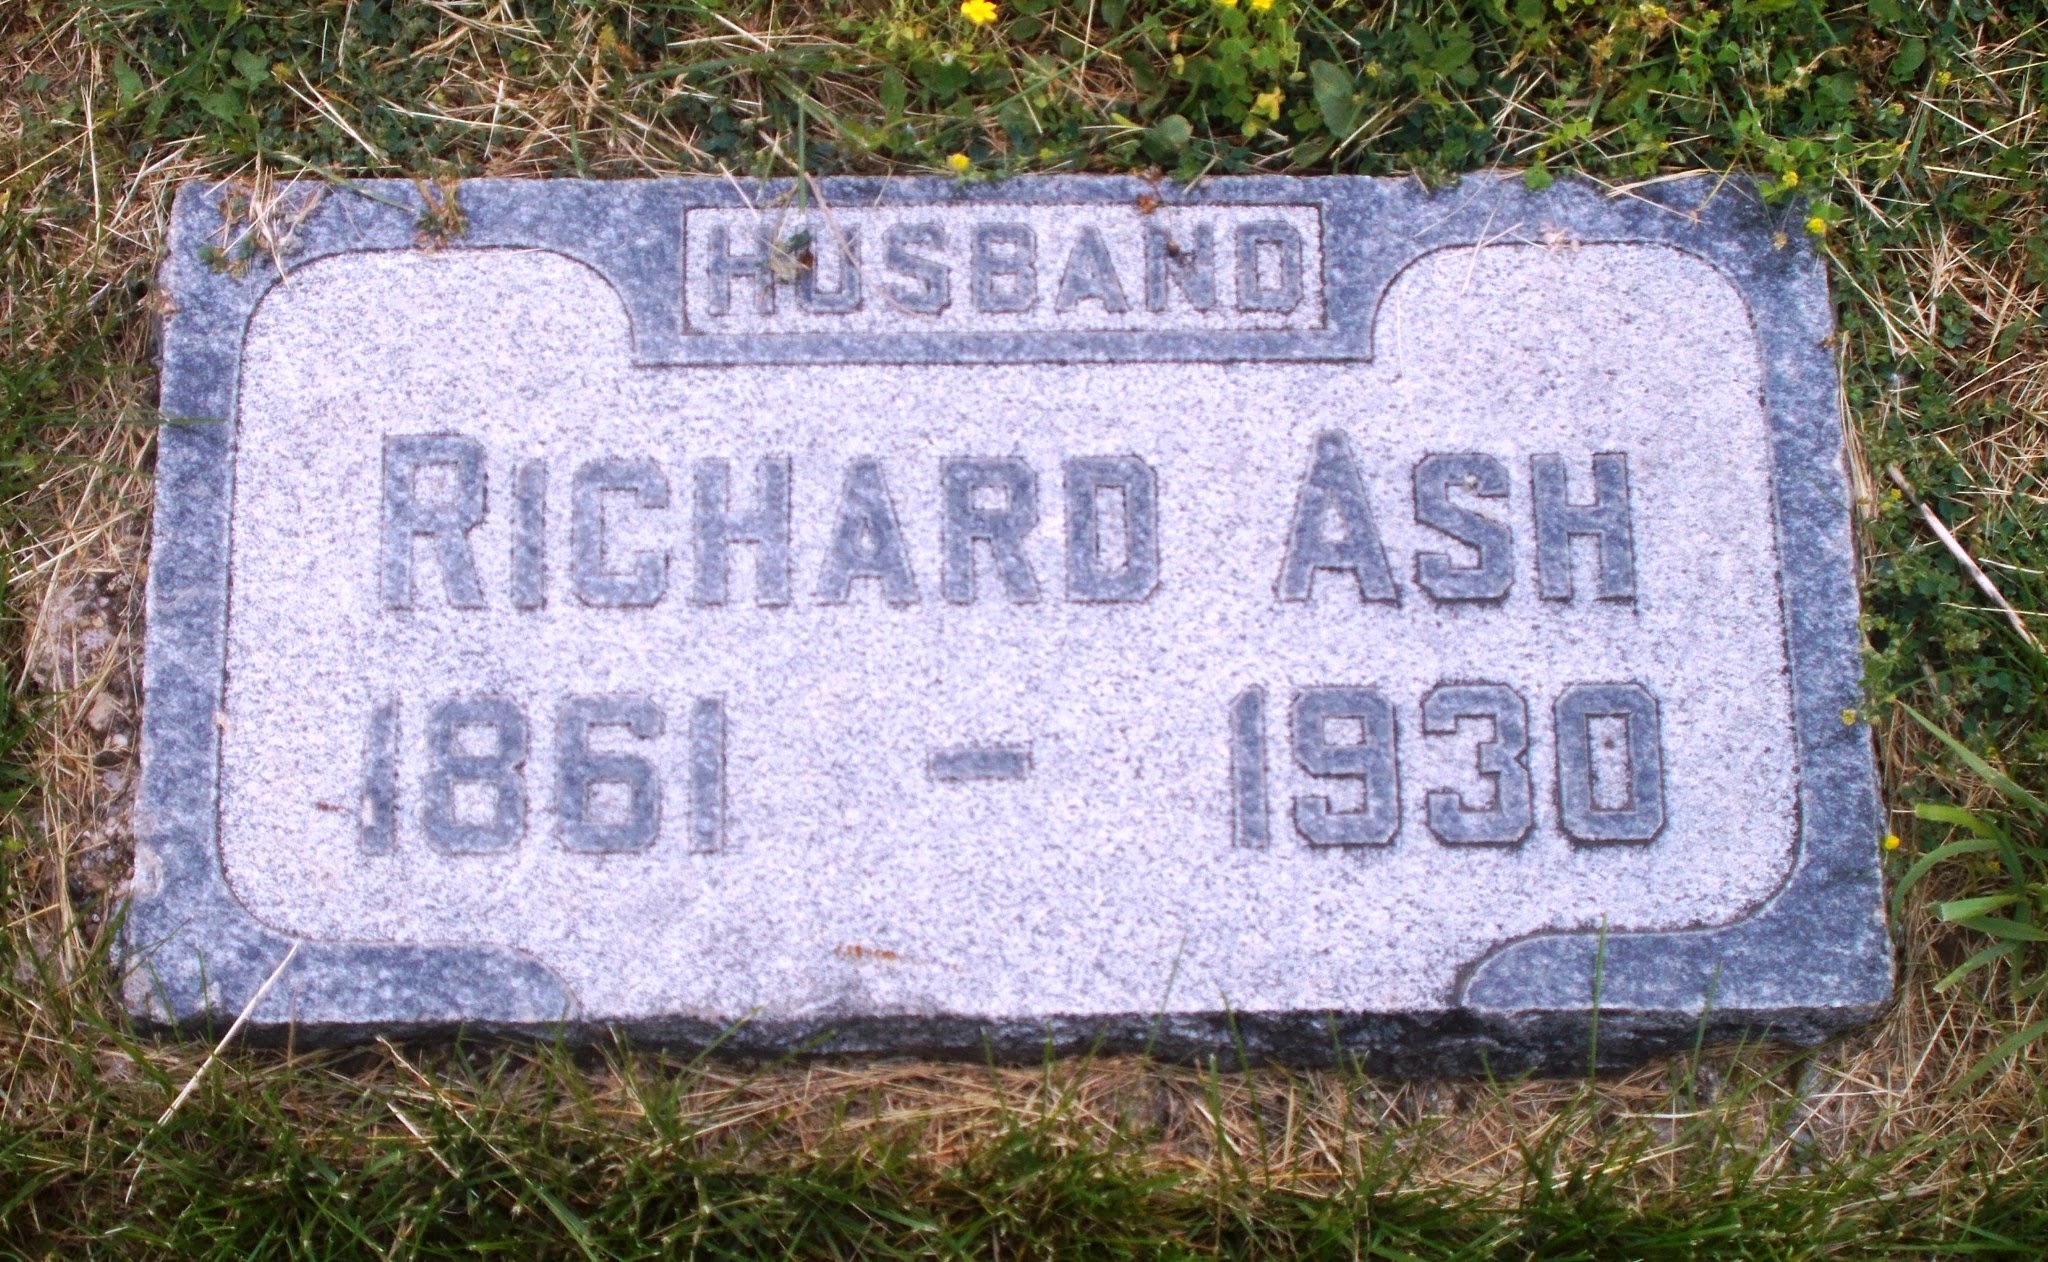 Richard Ash